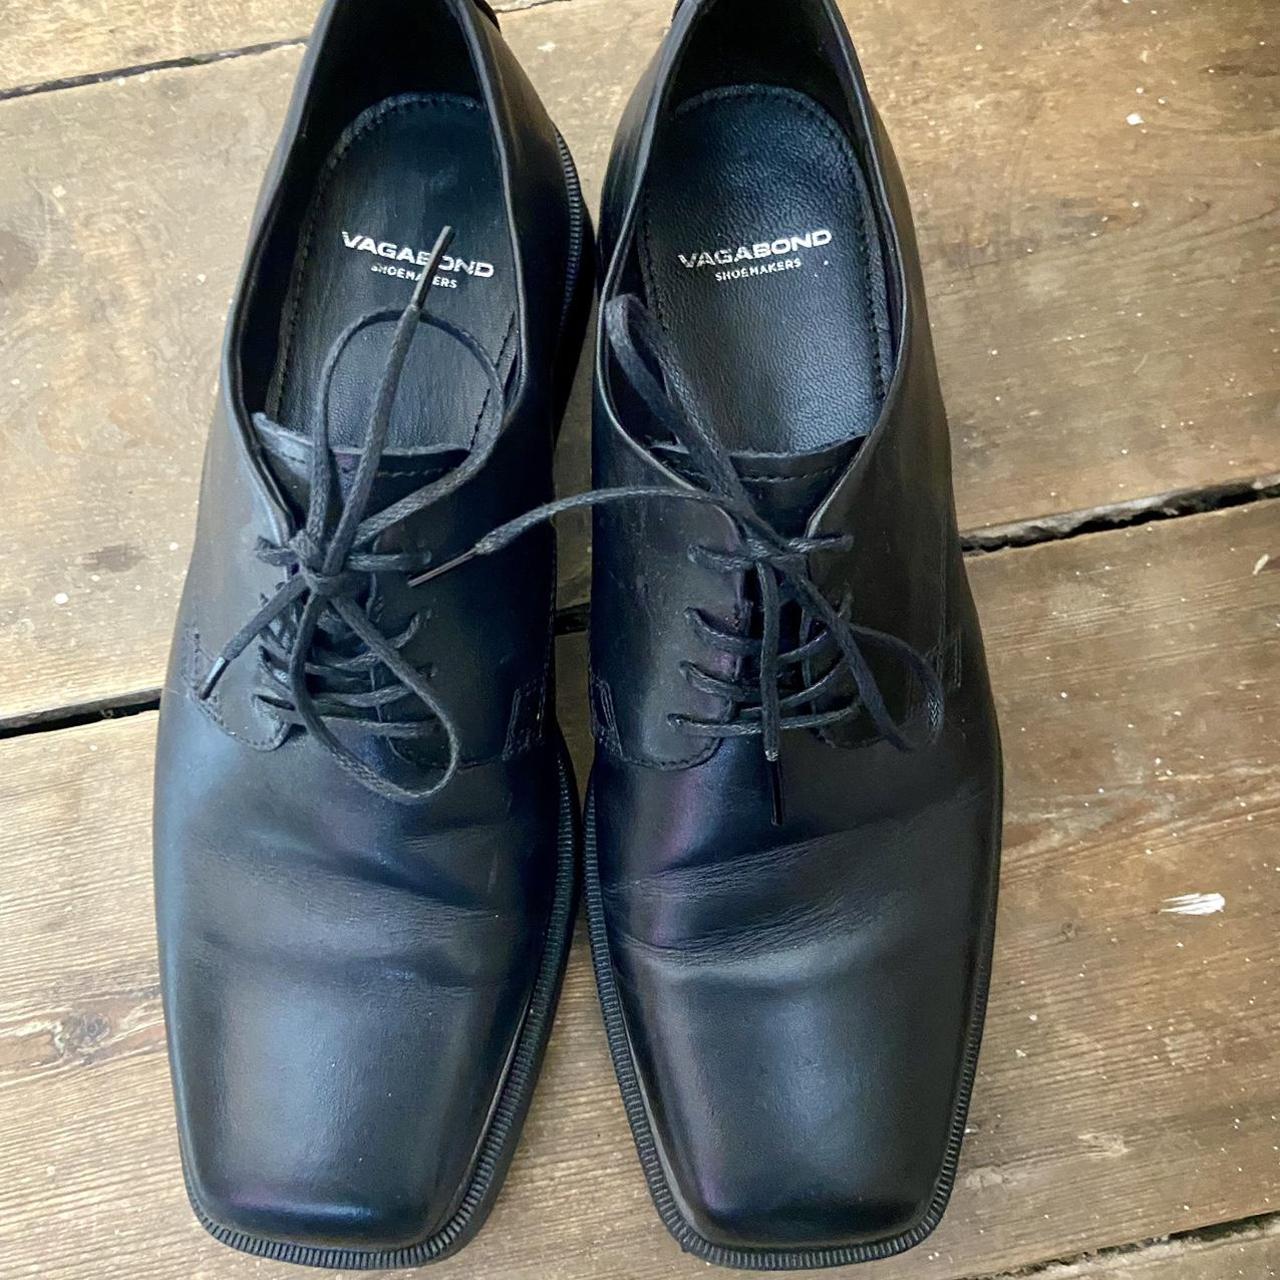 Black Vagabond Oxford shoes. Worn once. Excellent... - Depop